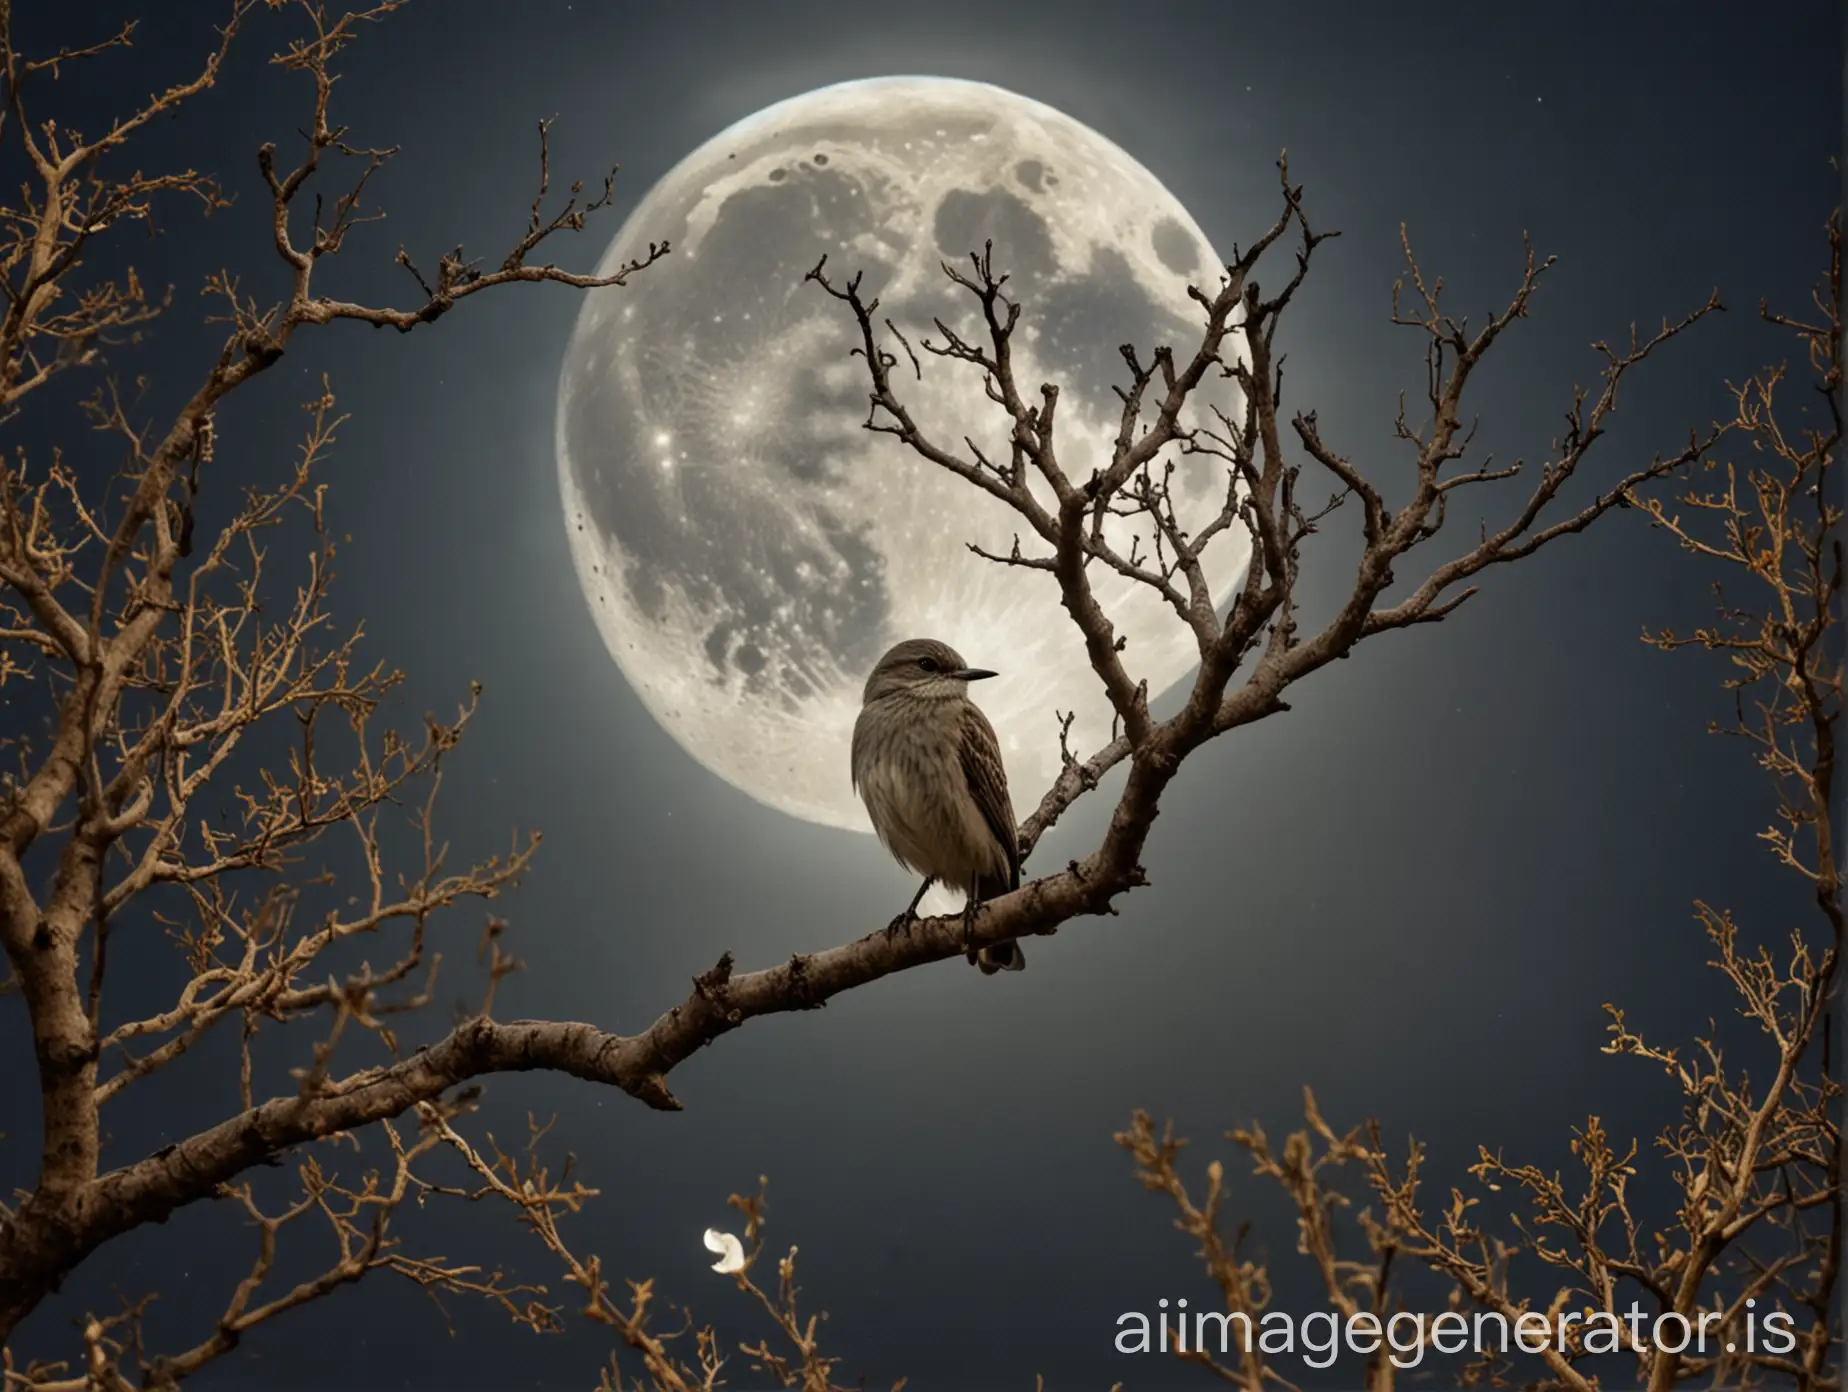 Scenic-Night-Bird-Perched-on-Moonlit-Tree-Branch